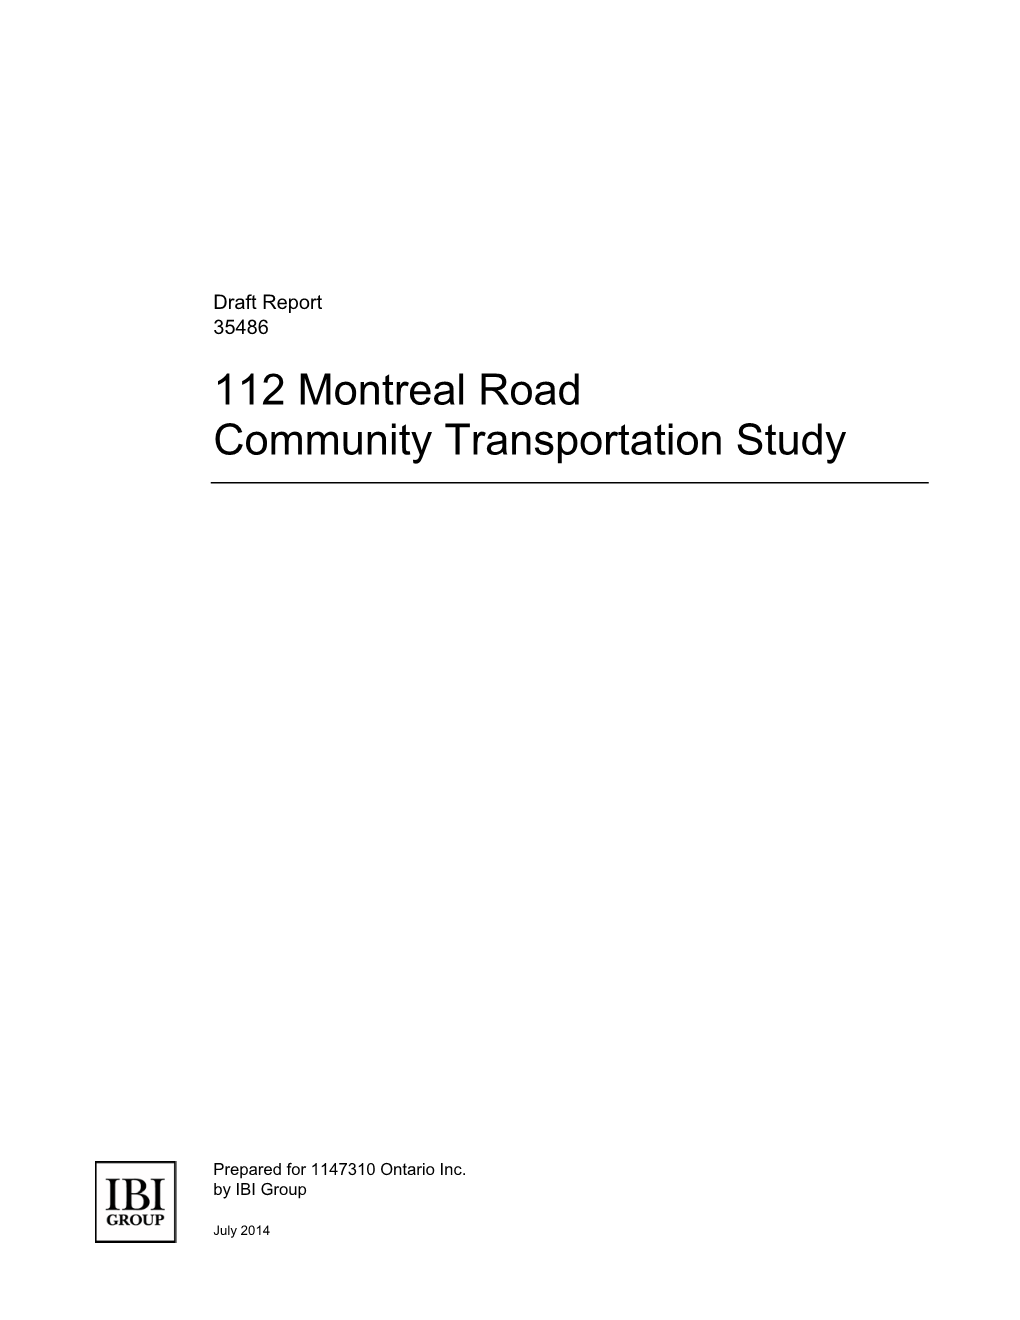 112 Montreal Road Community Transportation Study